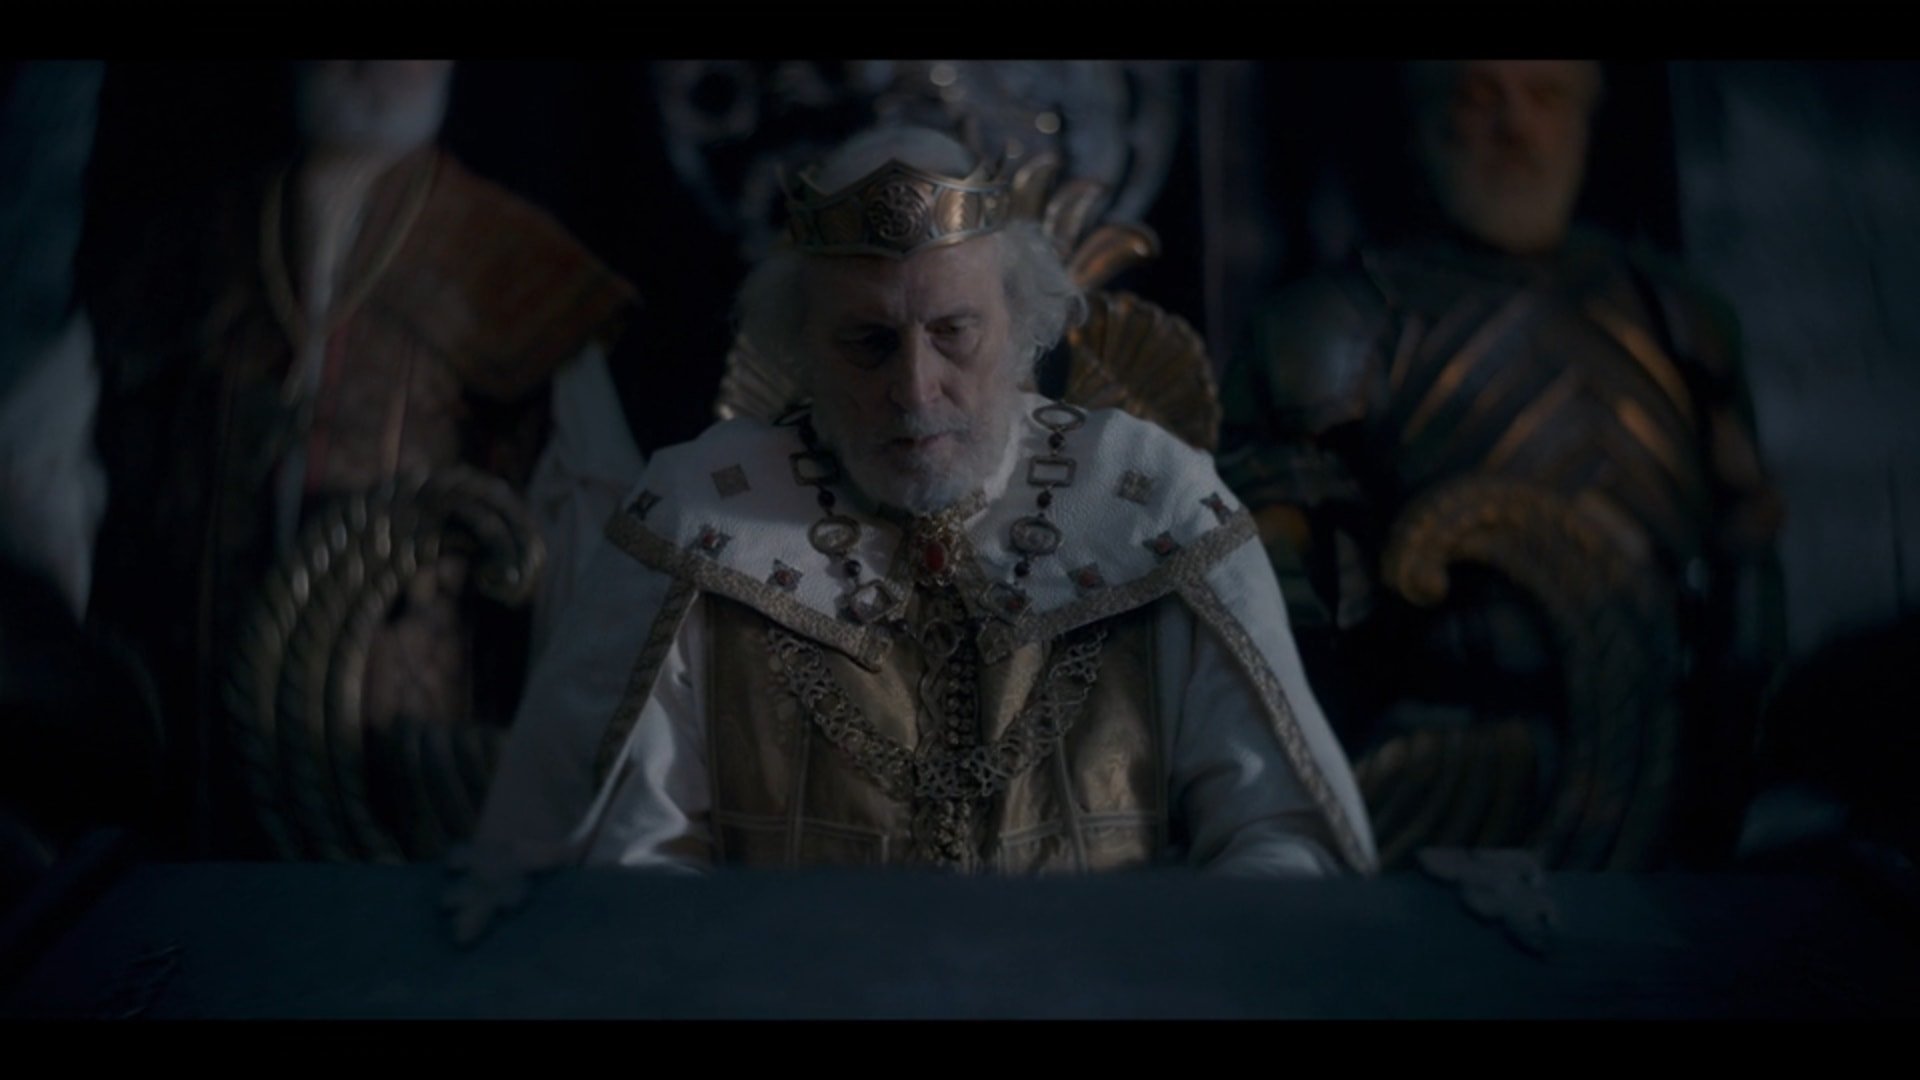 The Old King, Jaehaerys (Michael Carter), deciding on his successor